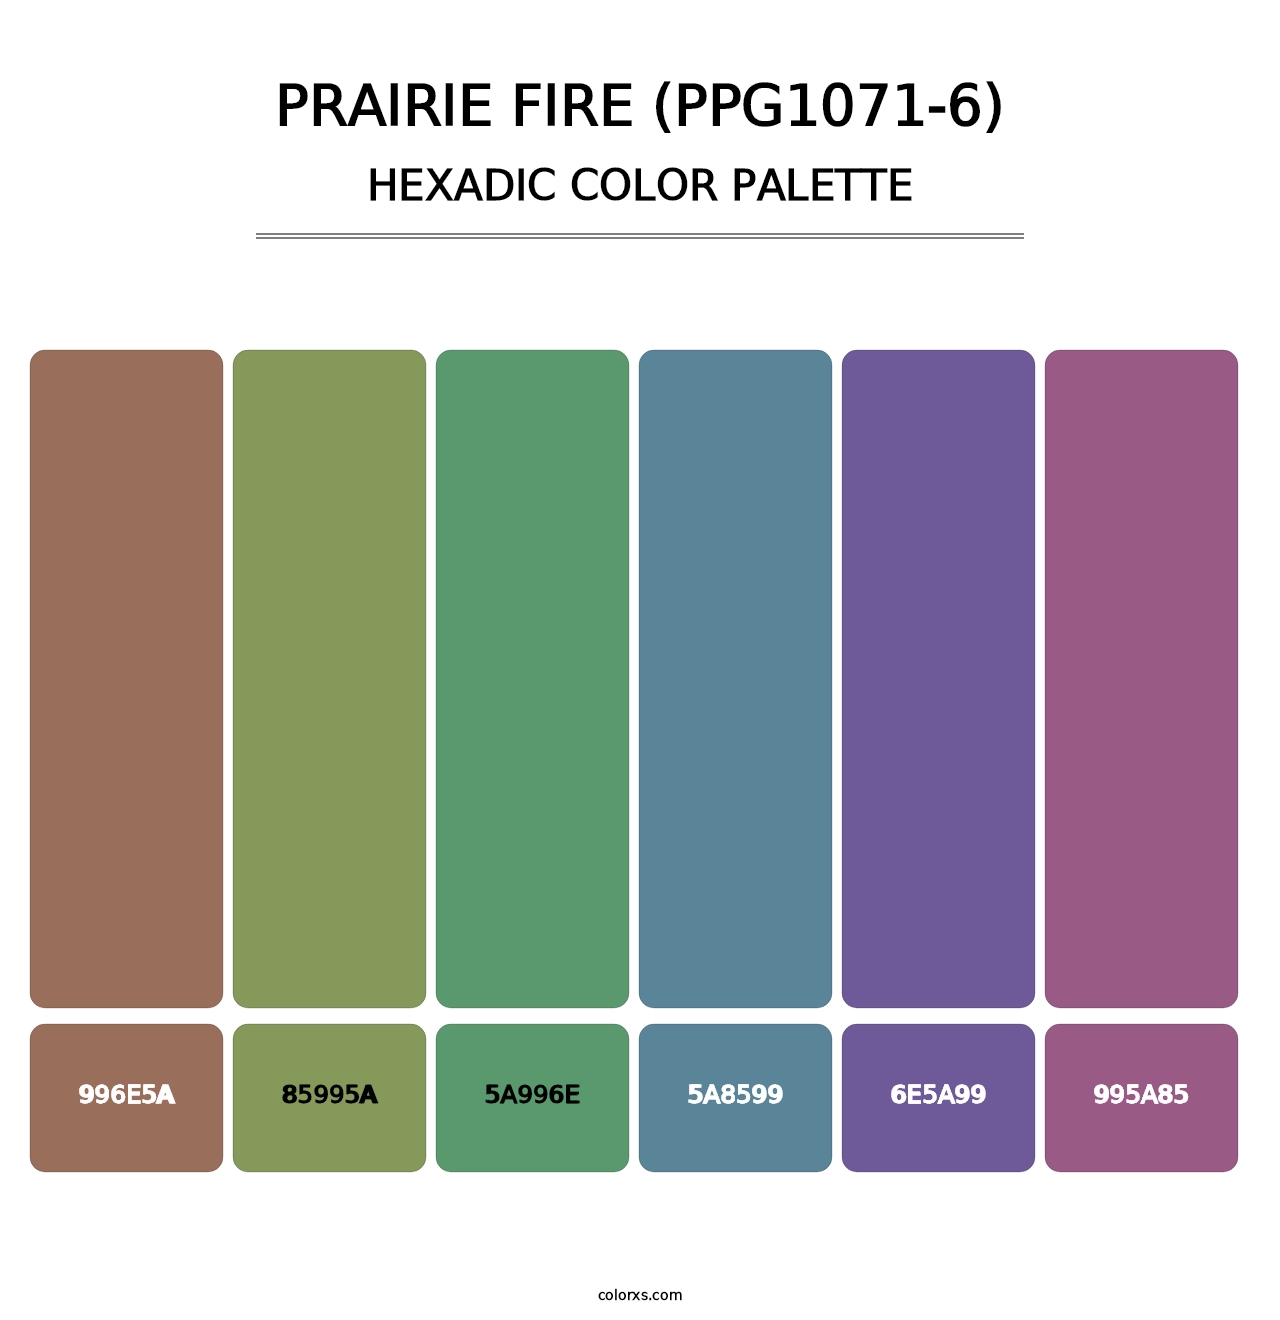 Prairie Fire (PPG1071-6) - Hexadic Color Palette